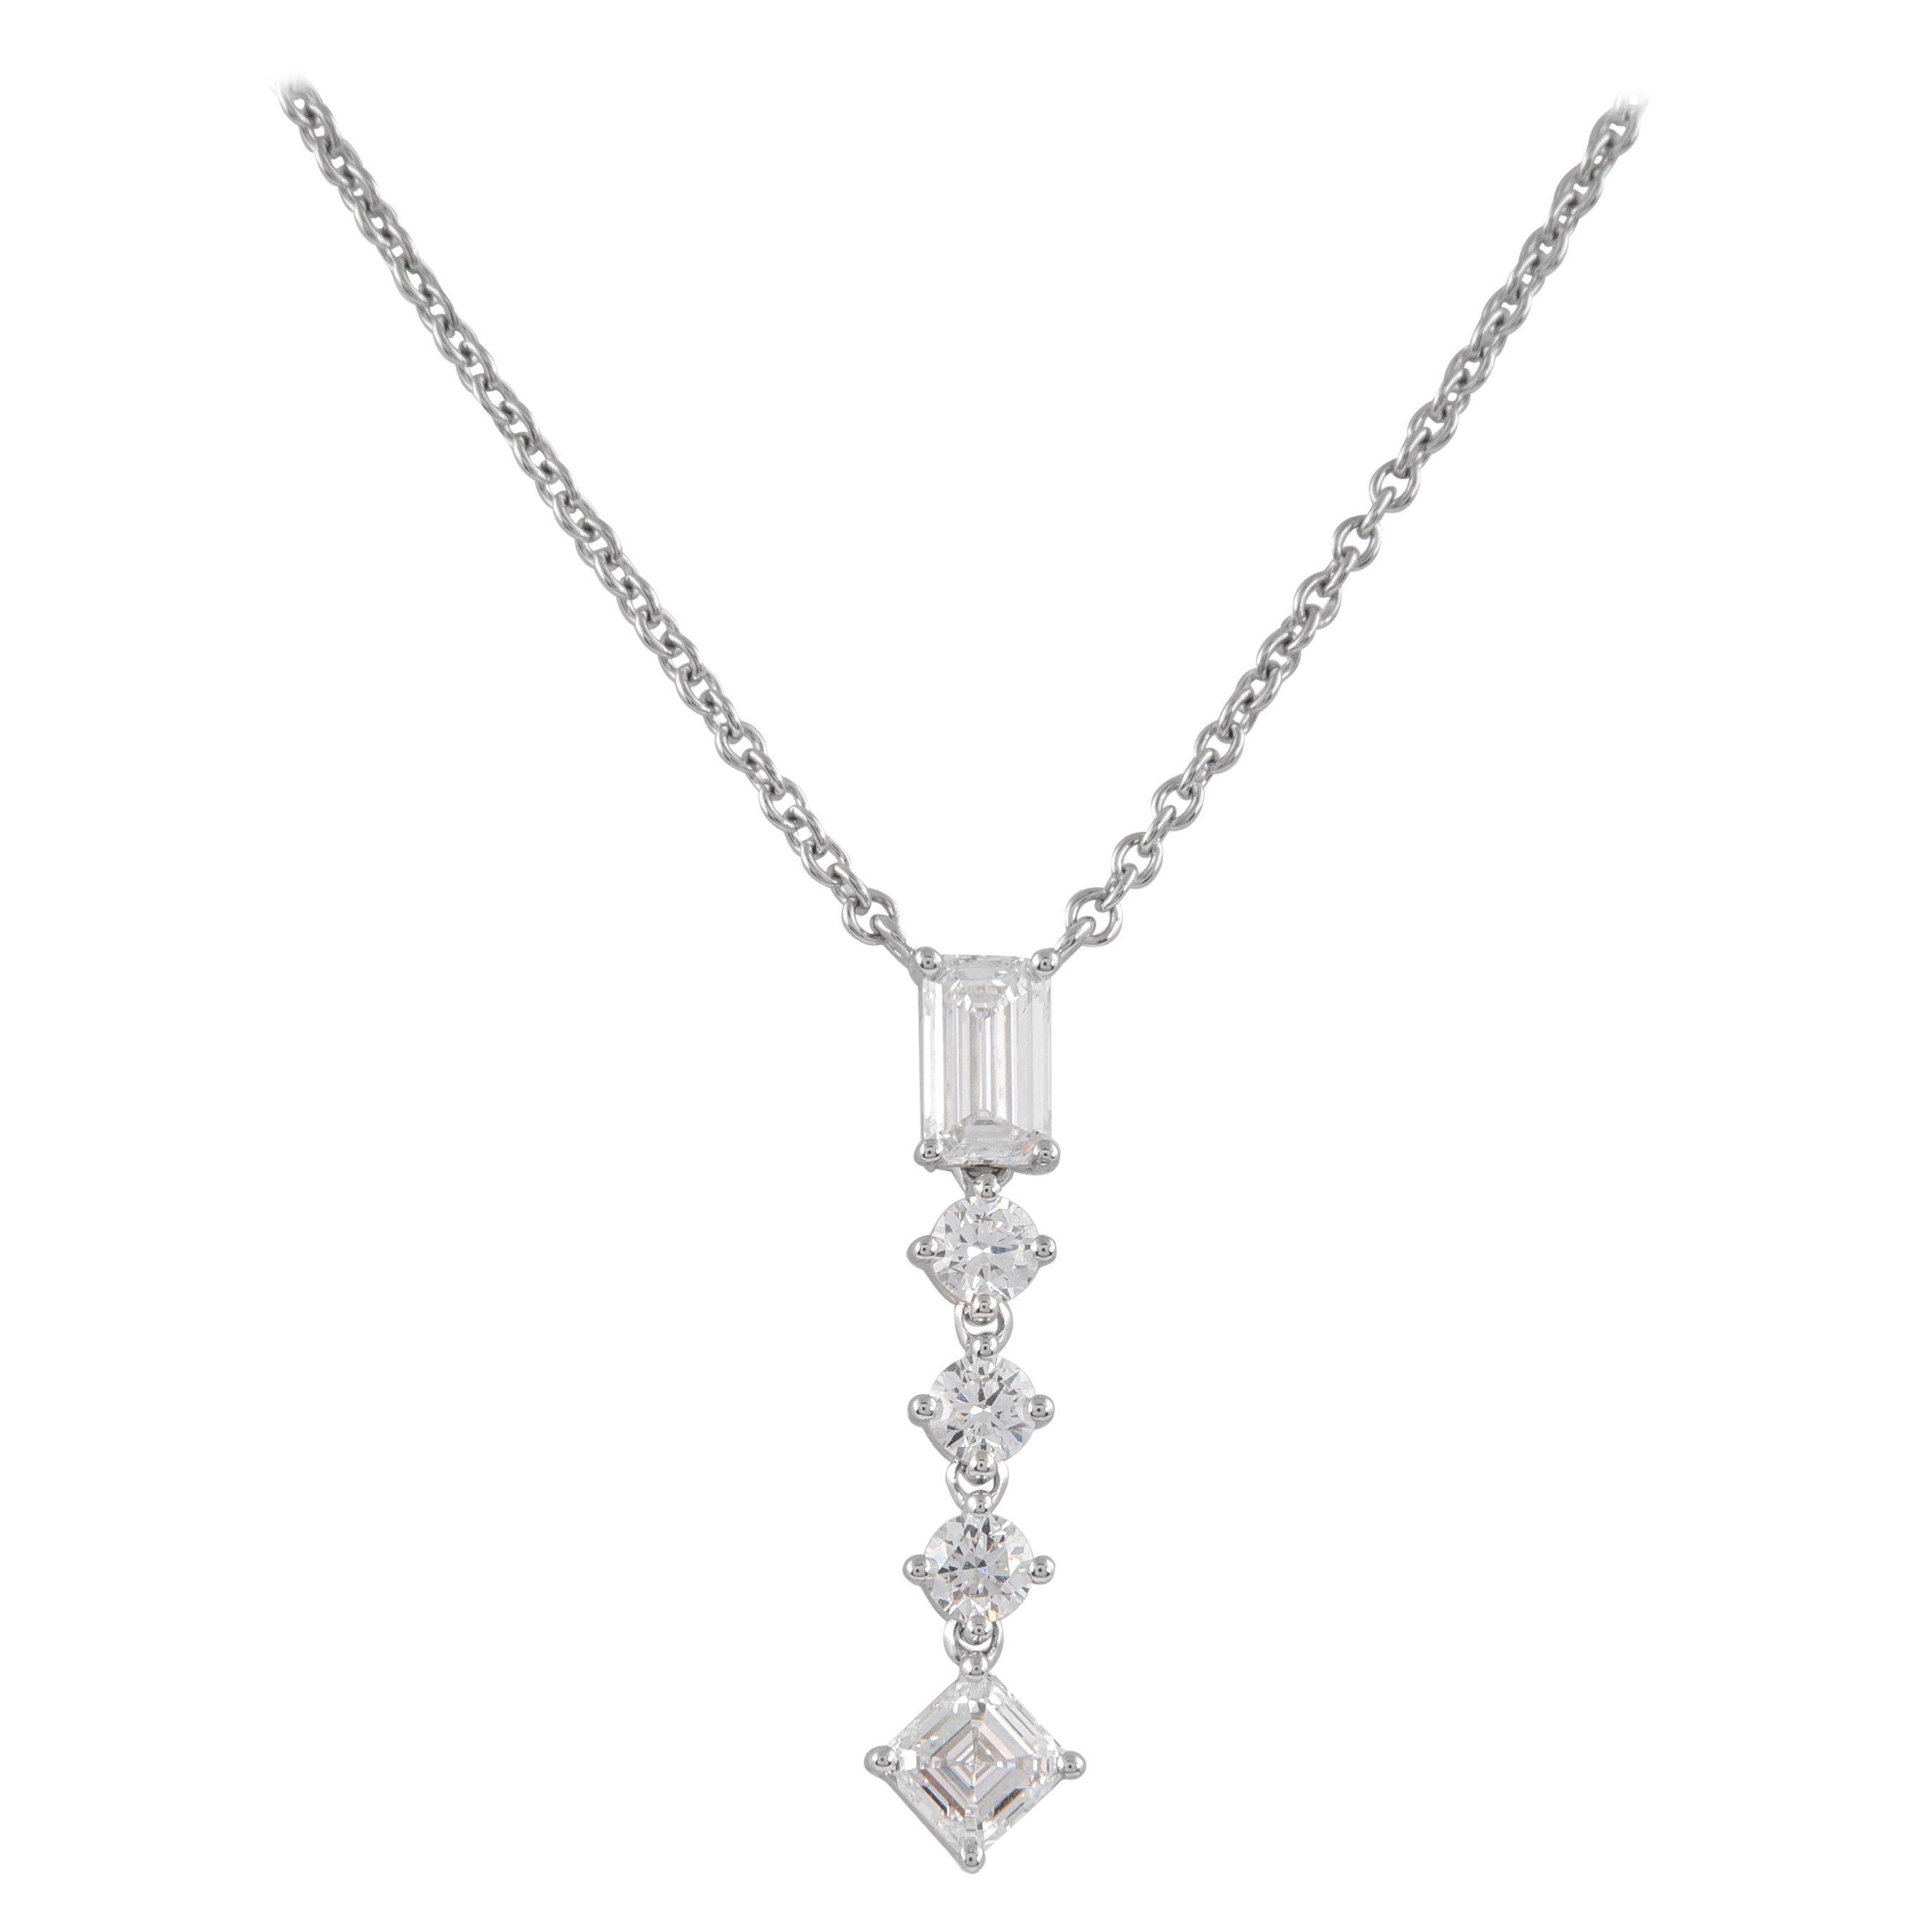 Alexander GIA Certified 1.56ctt Diamond Pendant Necklace 18k White Gold For Sale